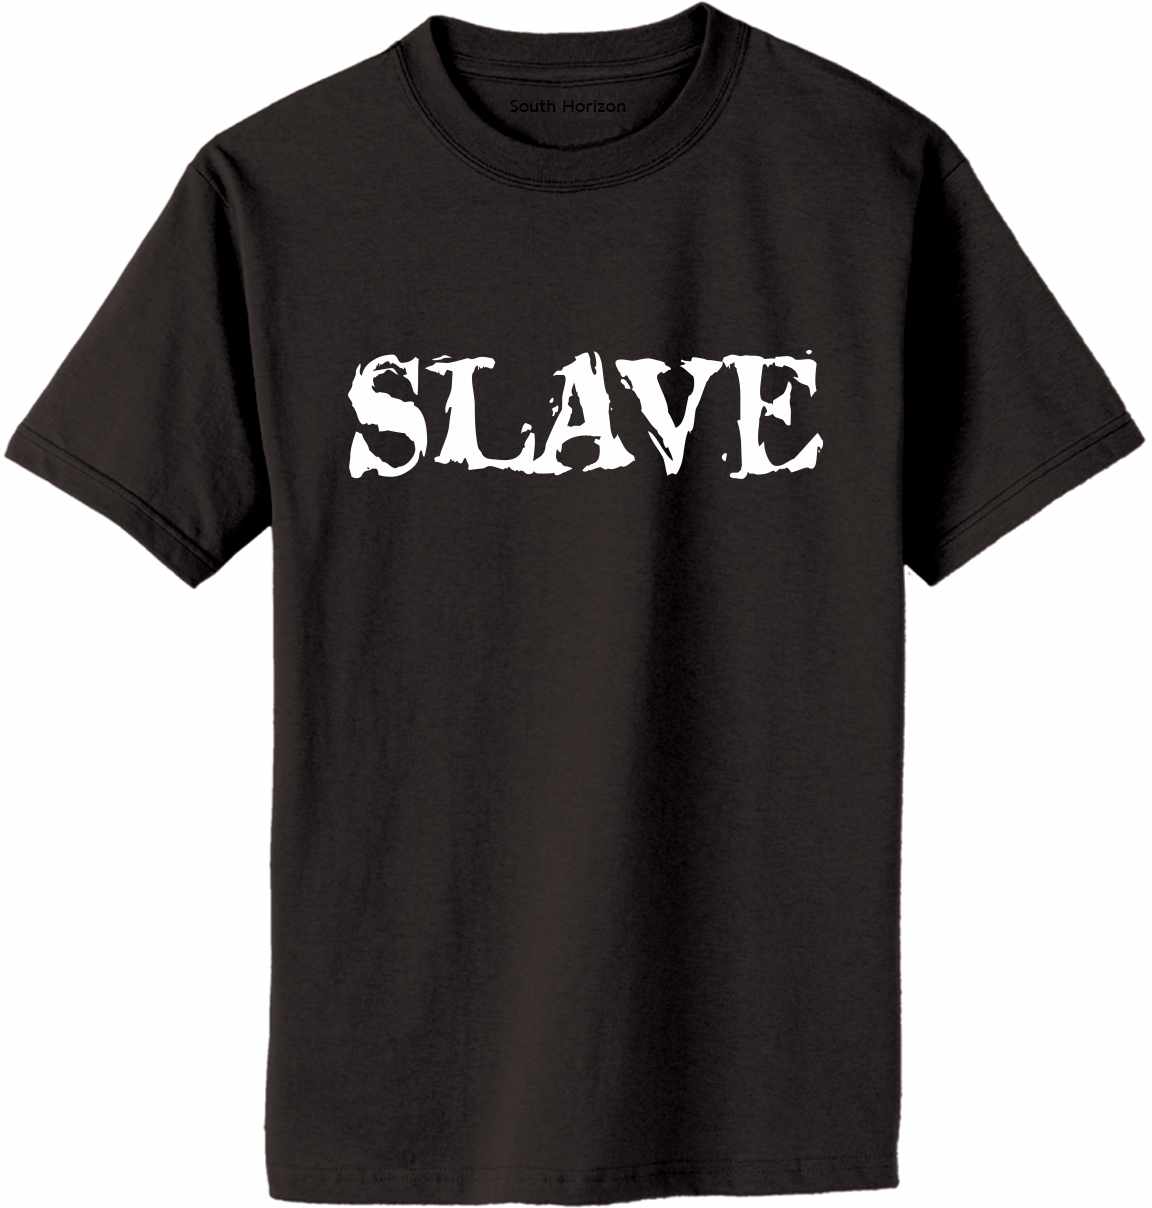 SLAVE Adult T-Shirt (#233-1)